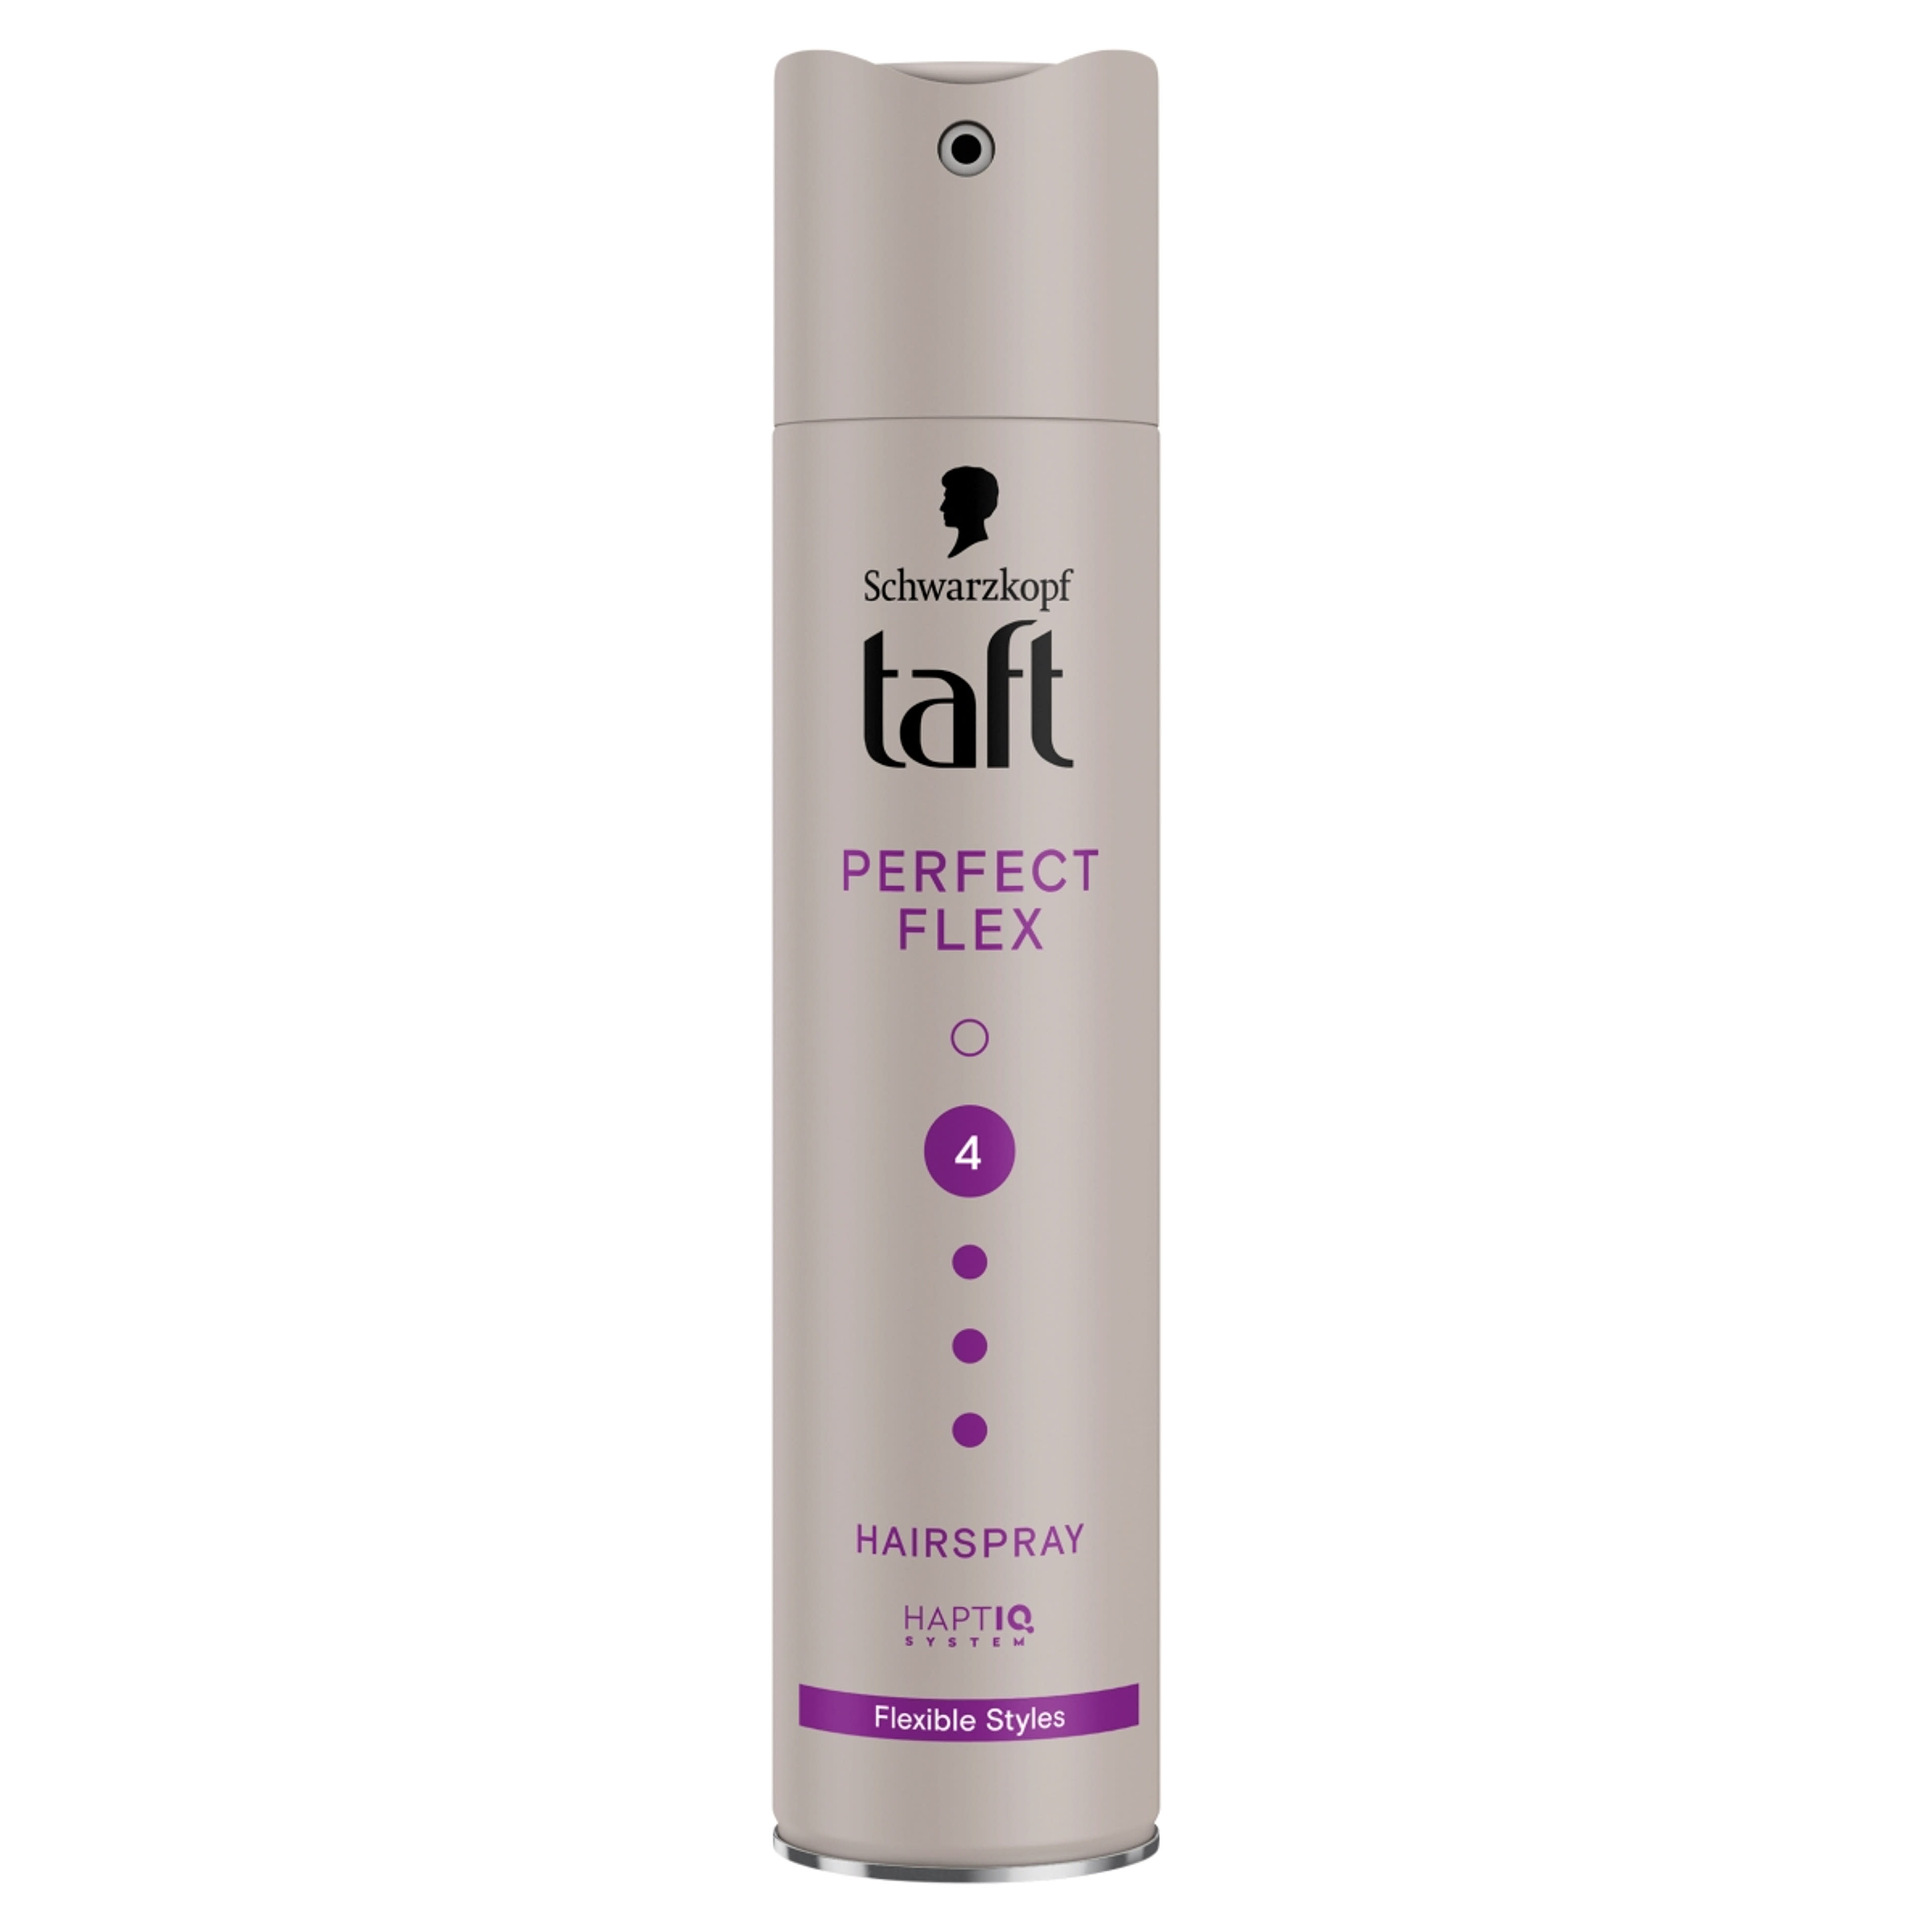 Taft Perfect Flex hajlakk - 250 ml